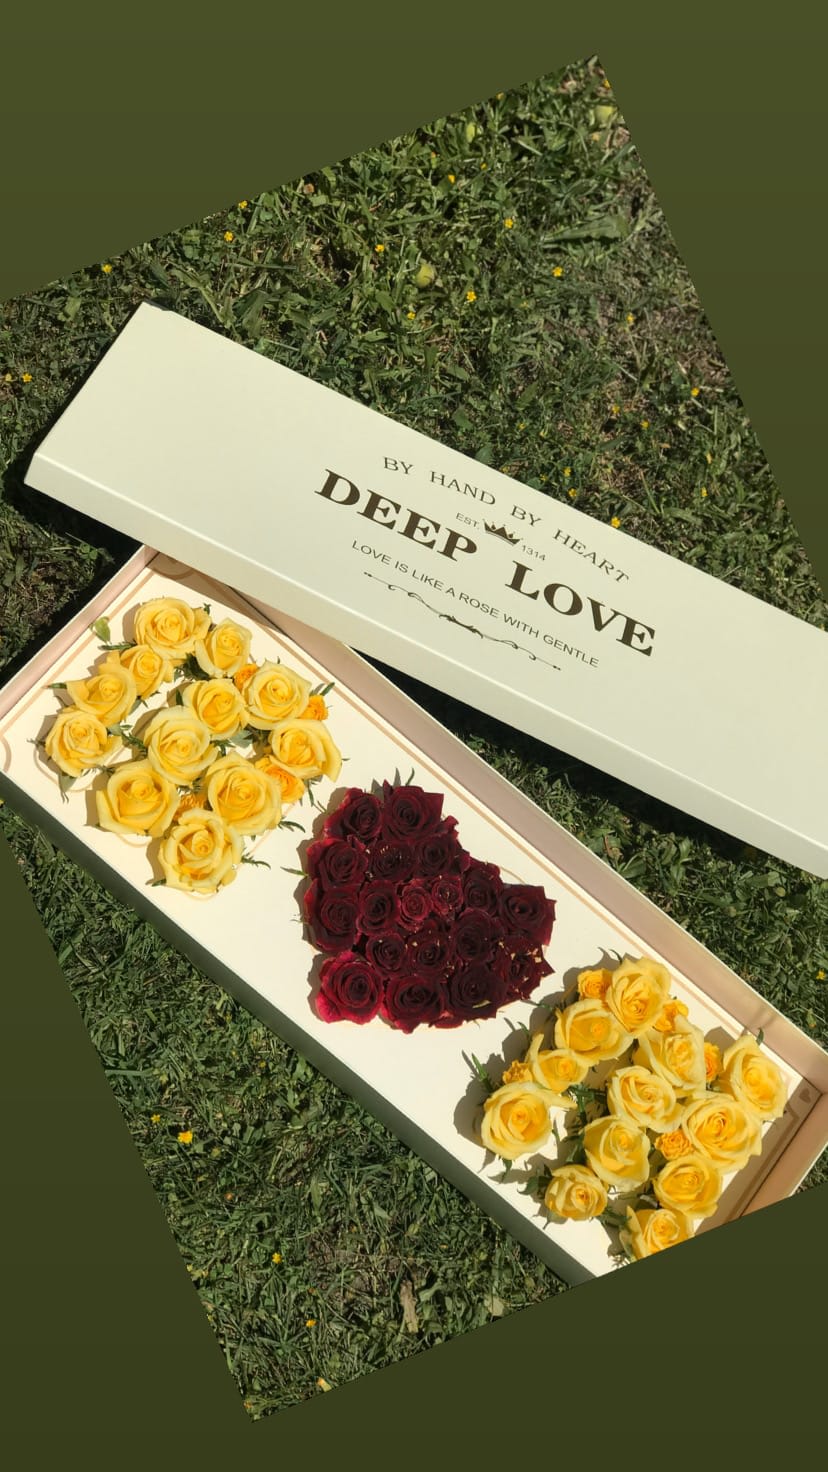 deep love flower box